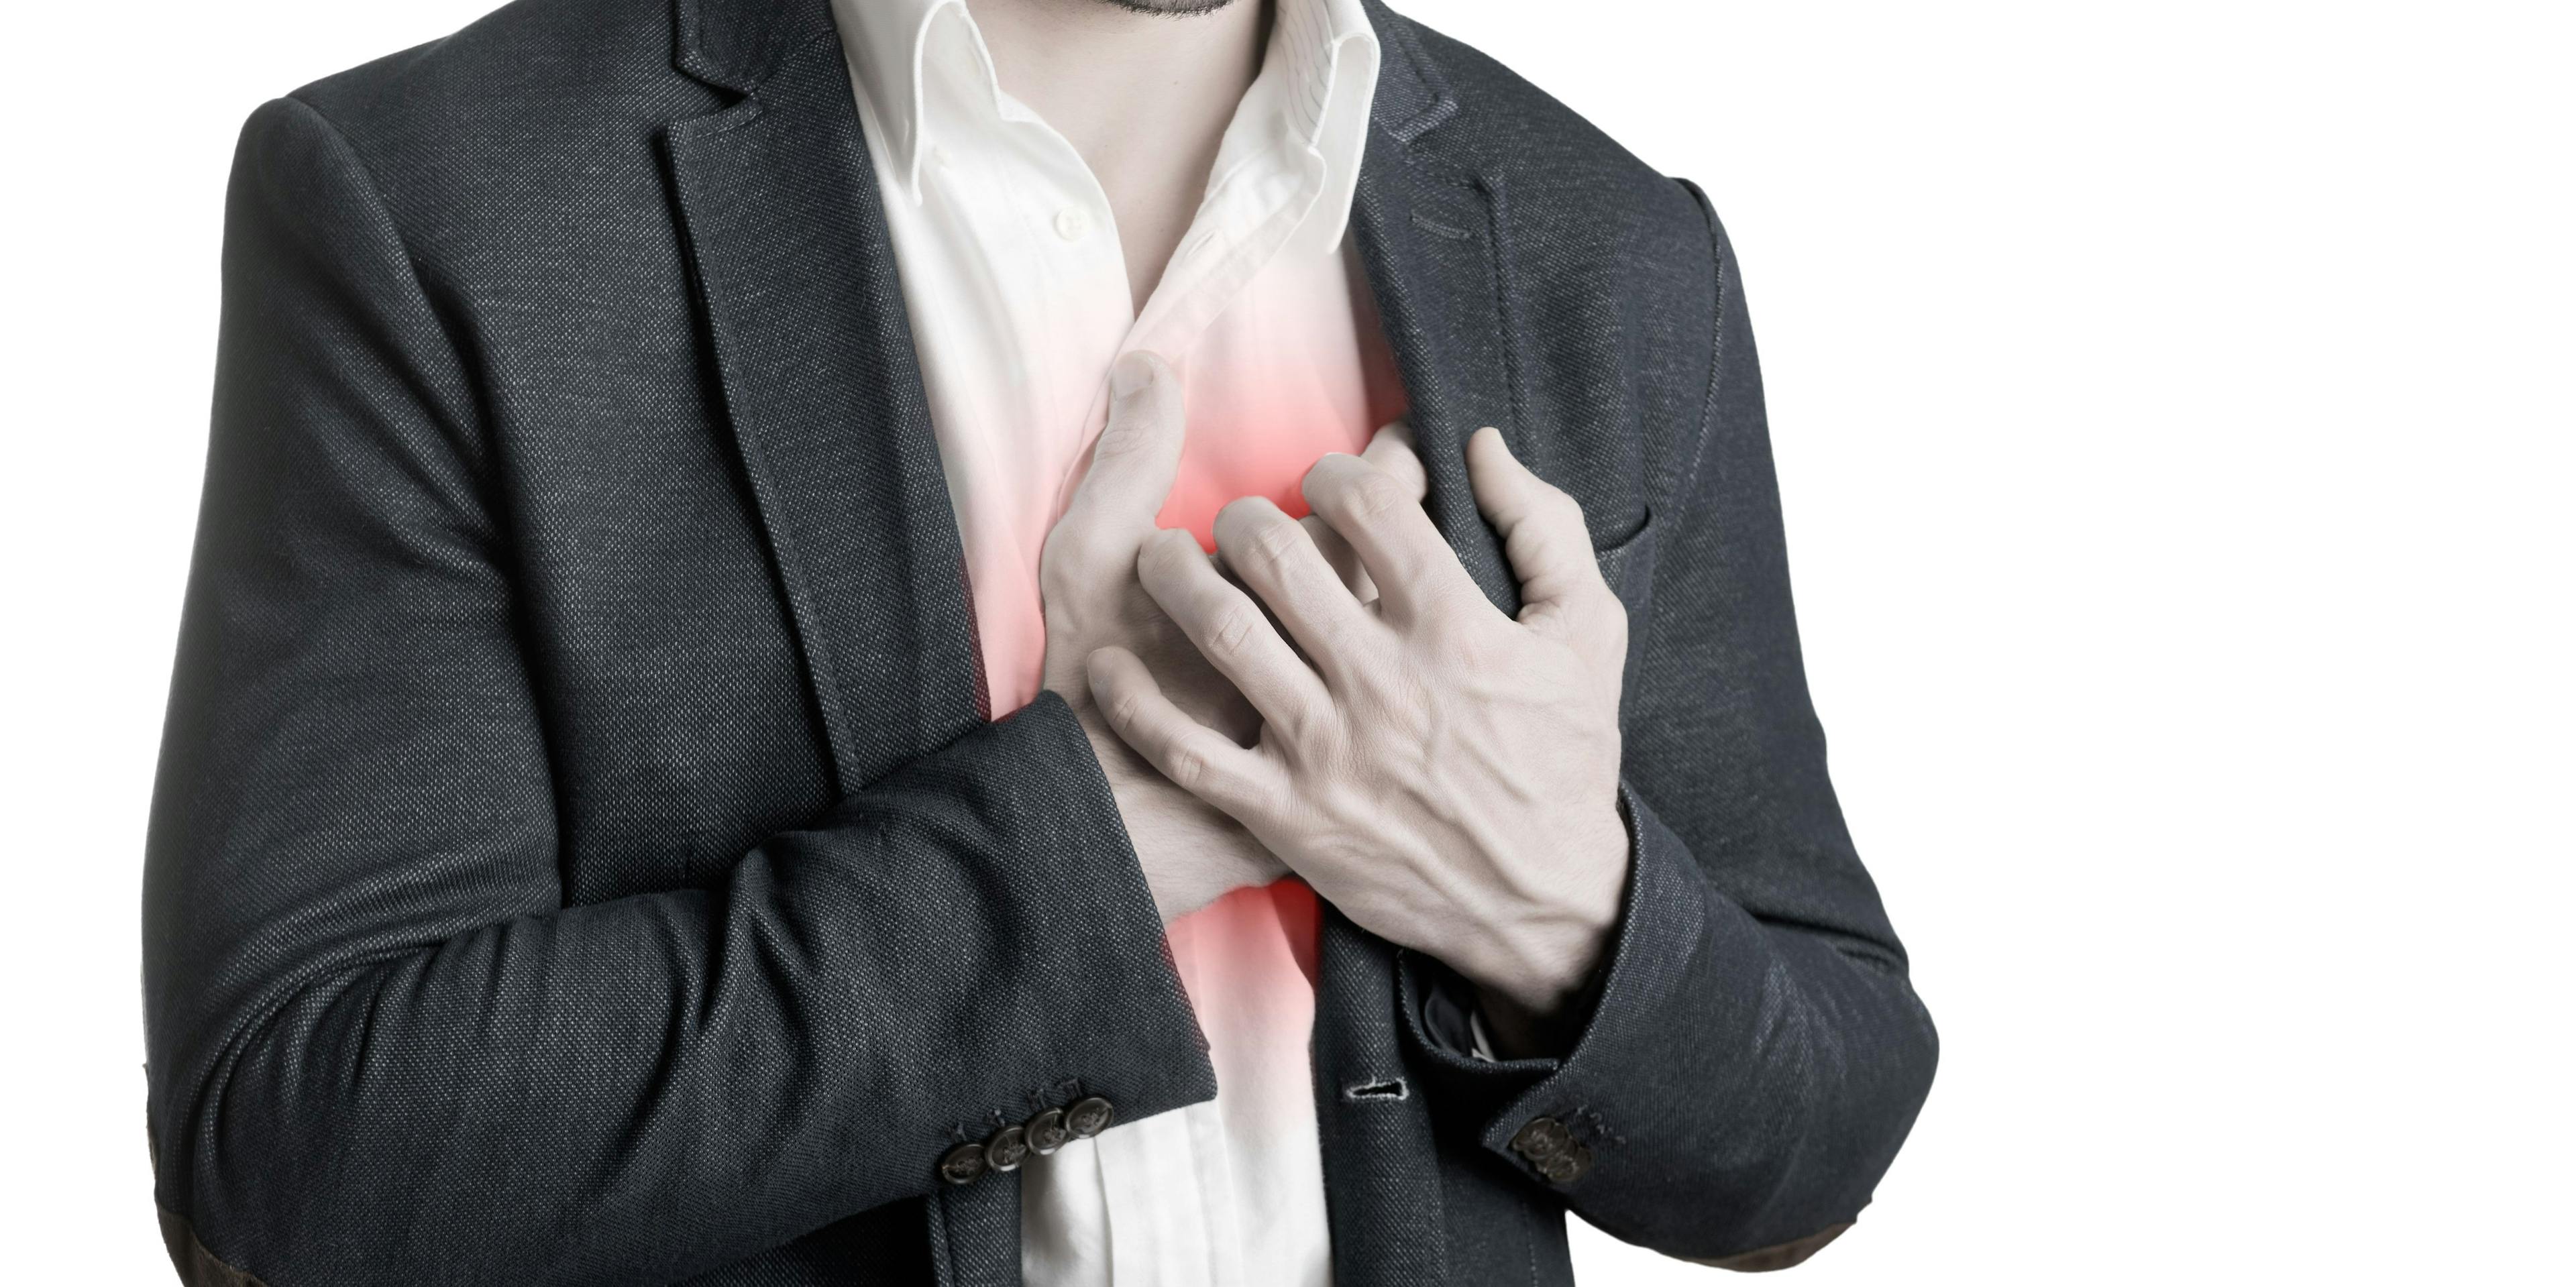 Mild Coronary Artery Disease Puts Diabetics at Cardiovascular Risk